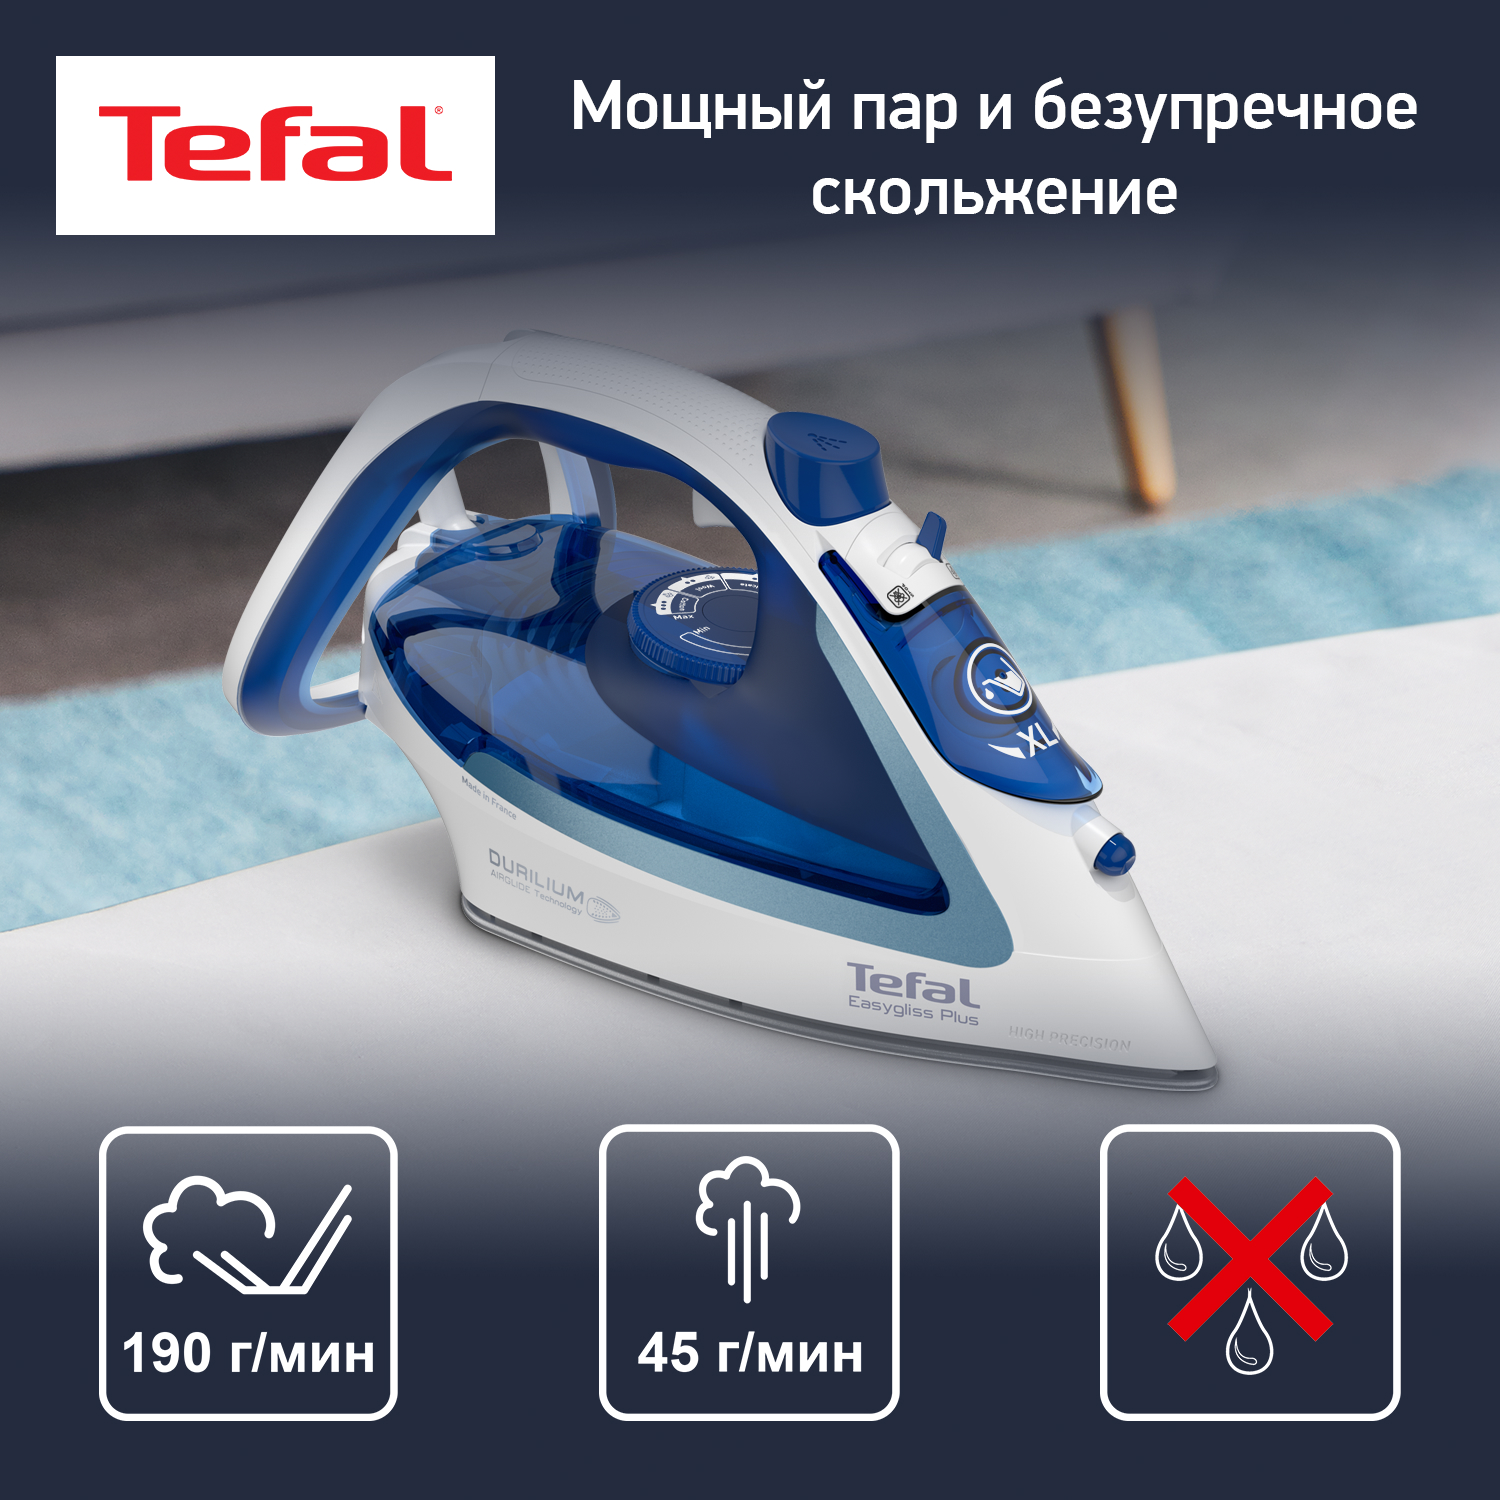 Утюг Tefal Easygliss Plus 2 FV5715E0, синий/белый - купить в Мегамаркет Москва КГТ, цена на Мегамаркет